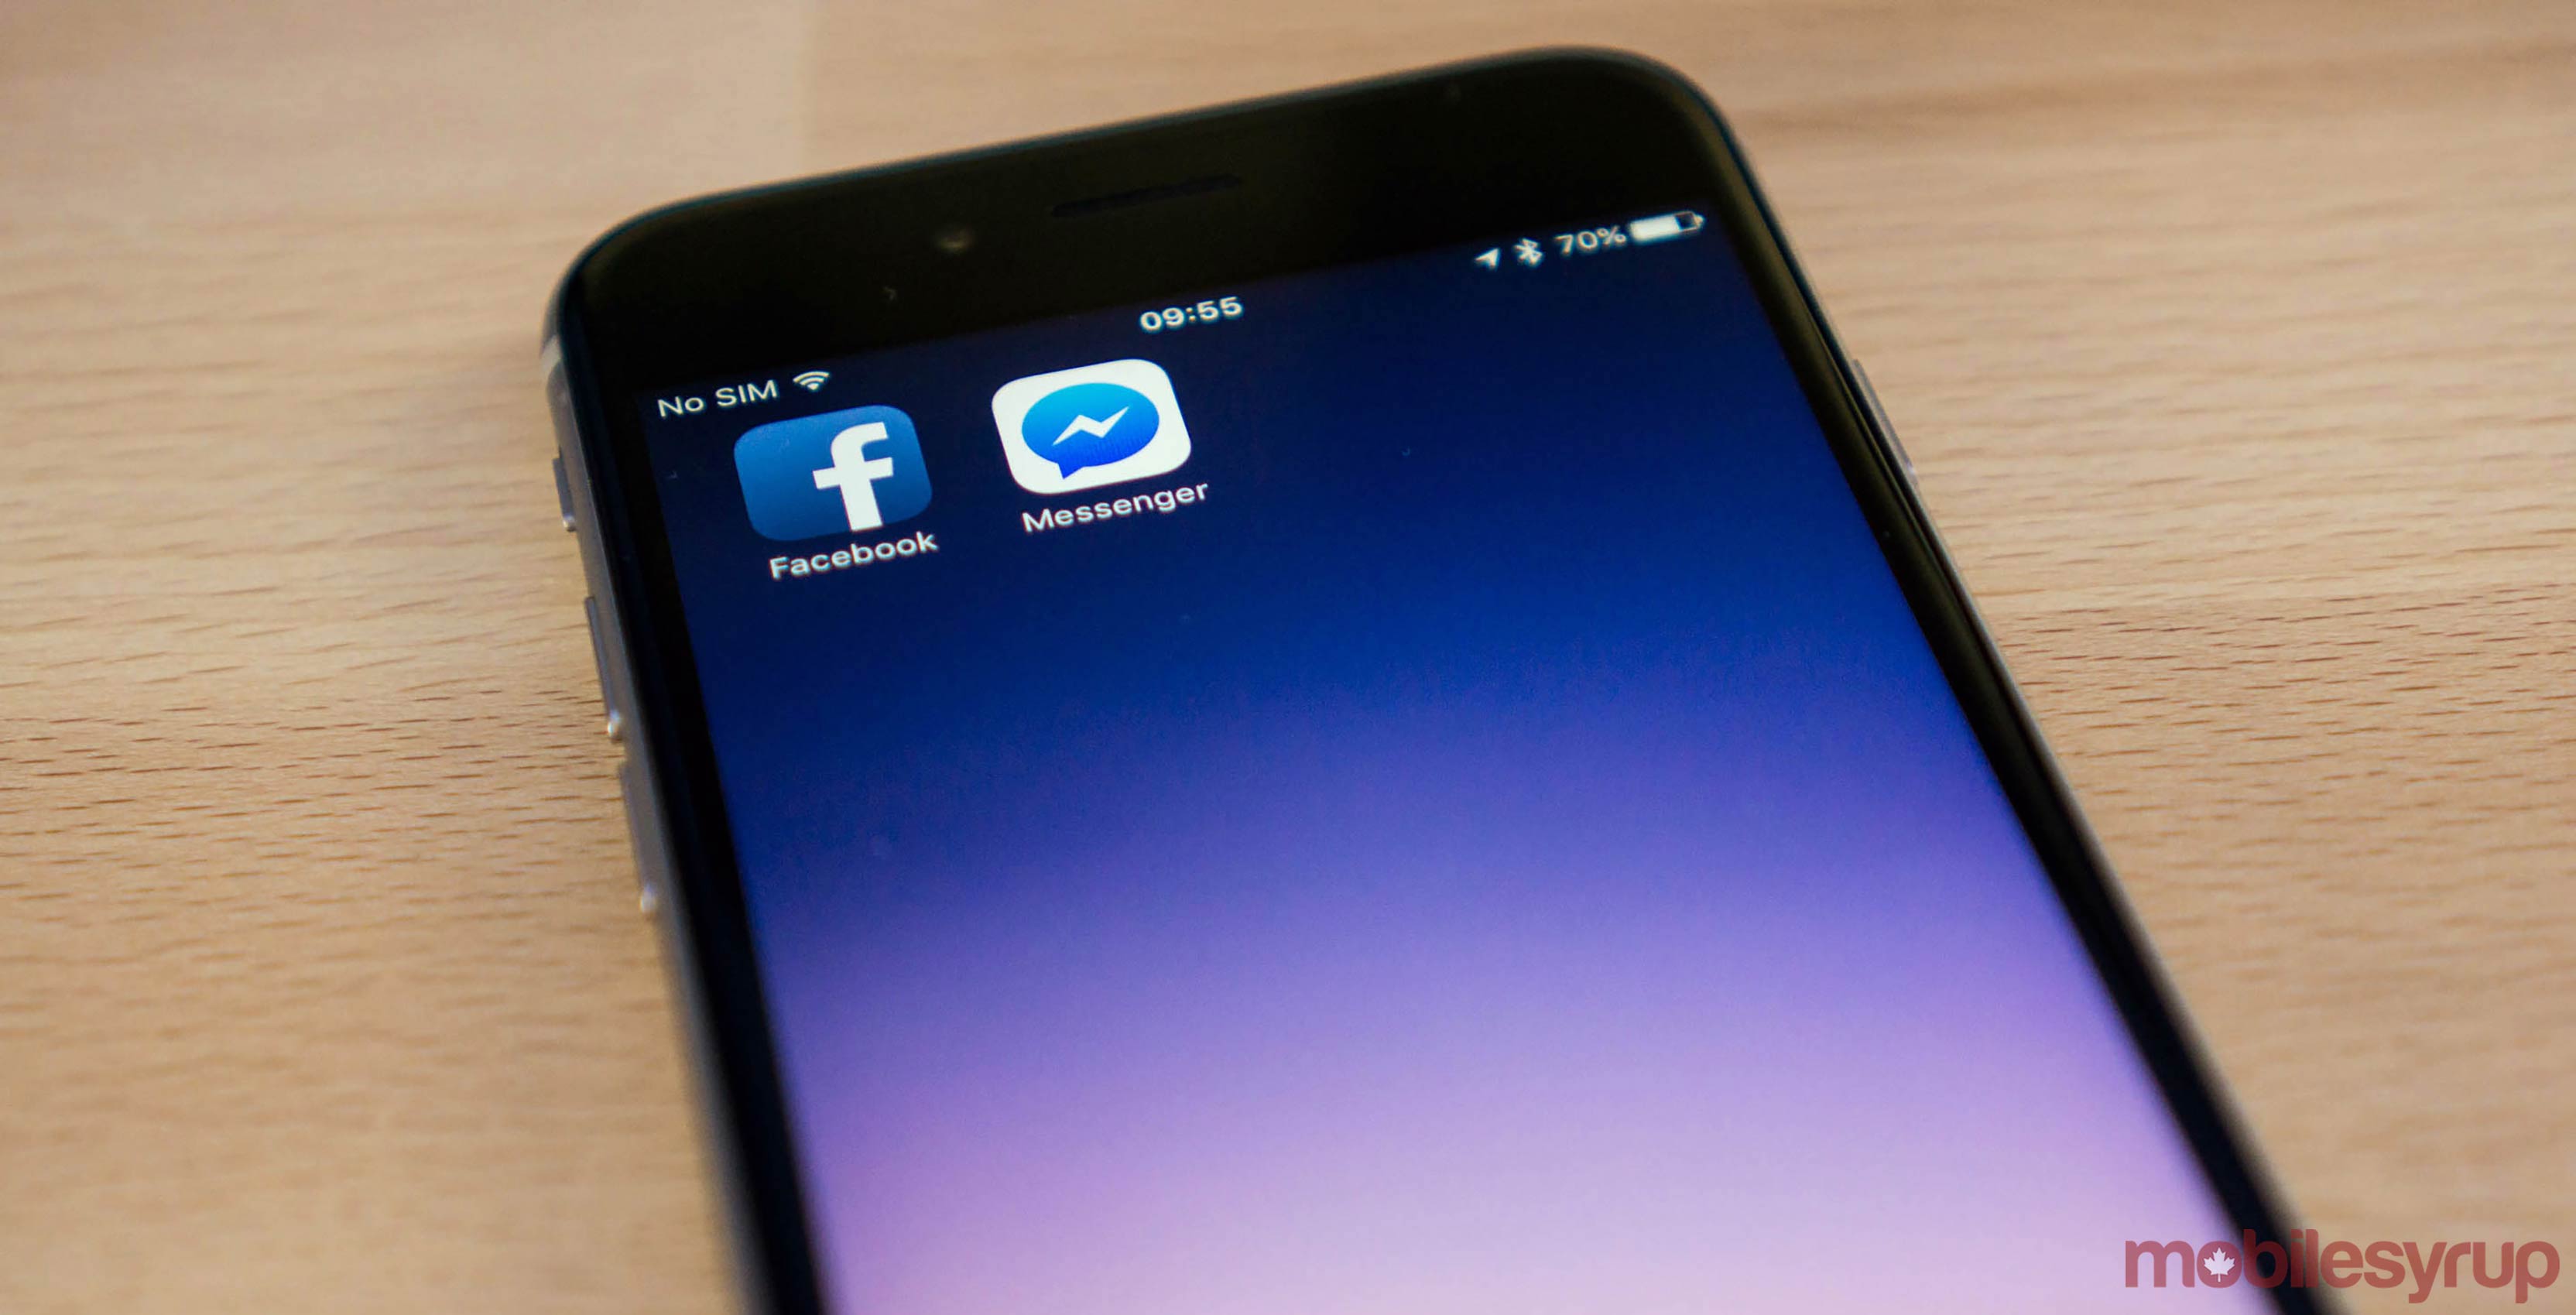 Facebook Messenger app on iPhone